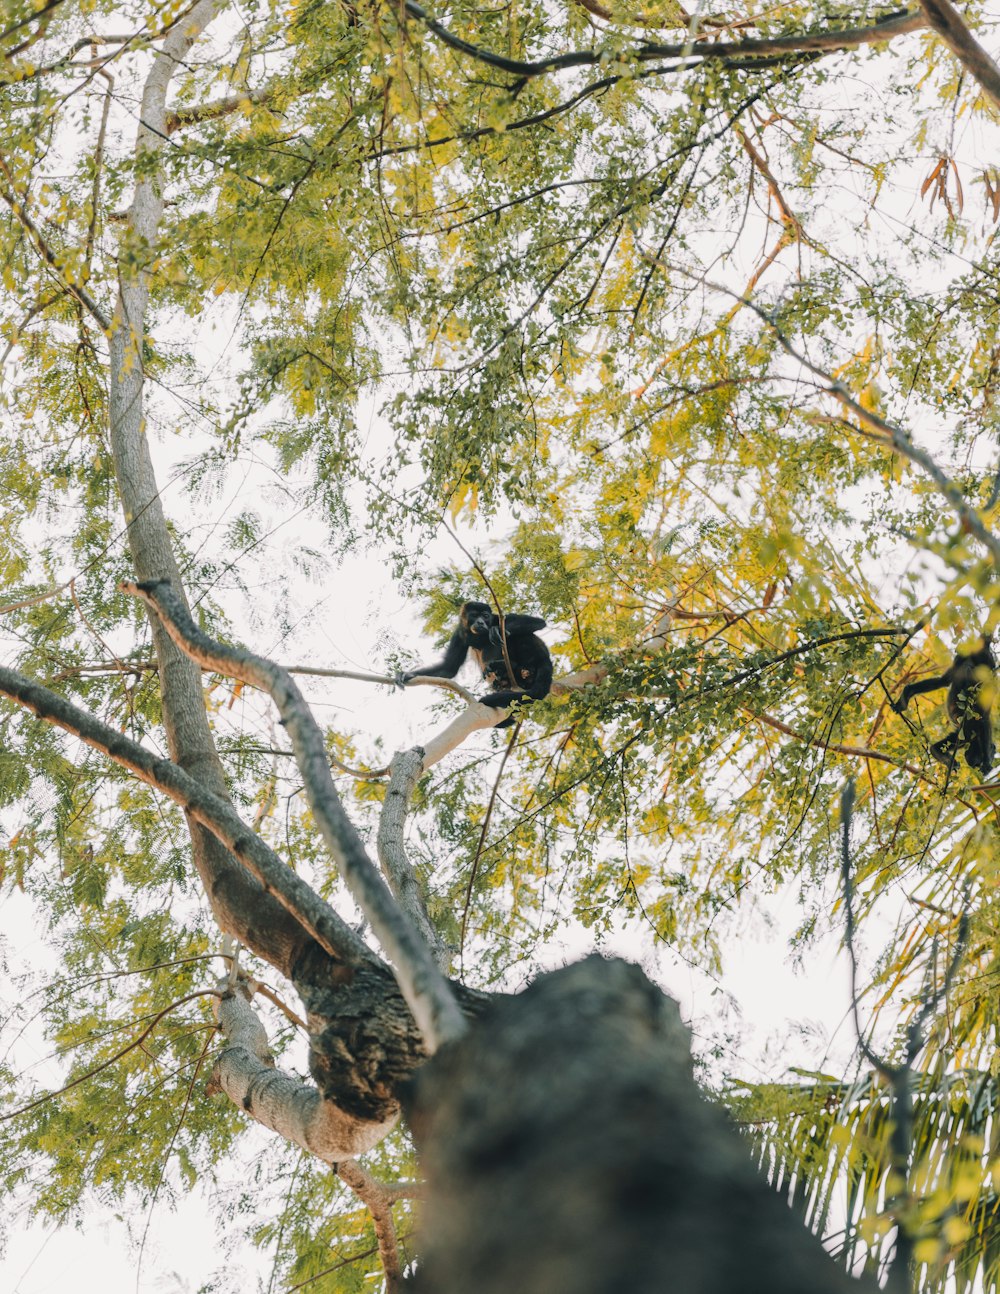 monkey climbing tree